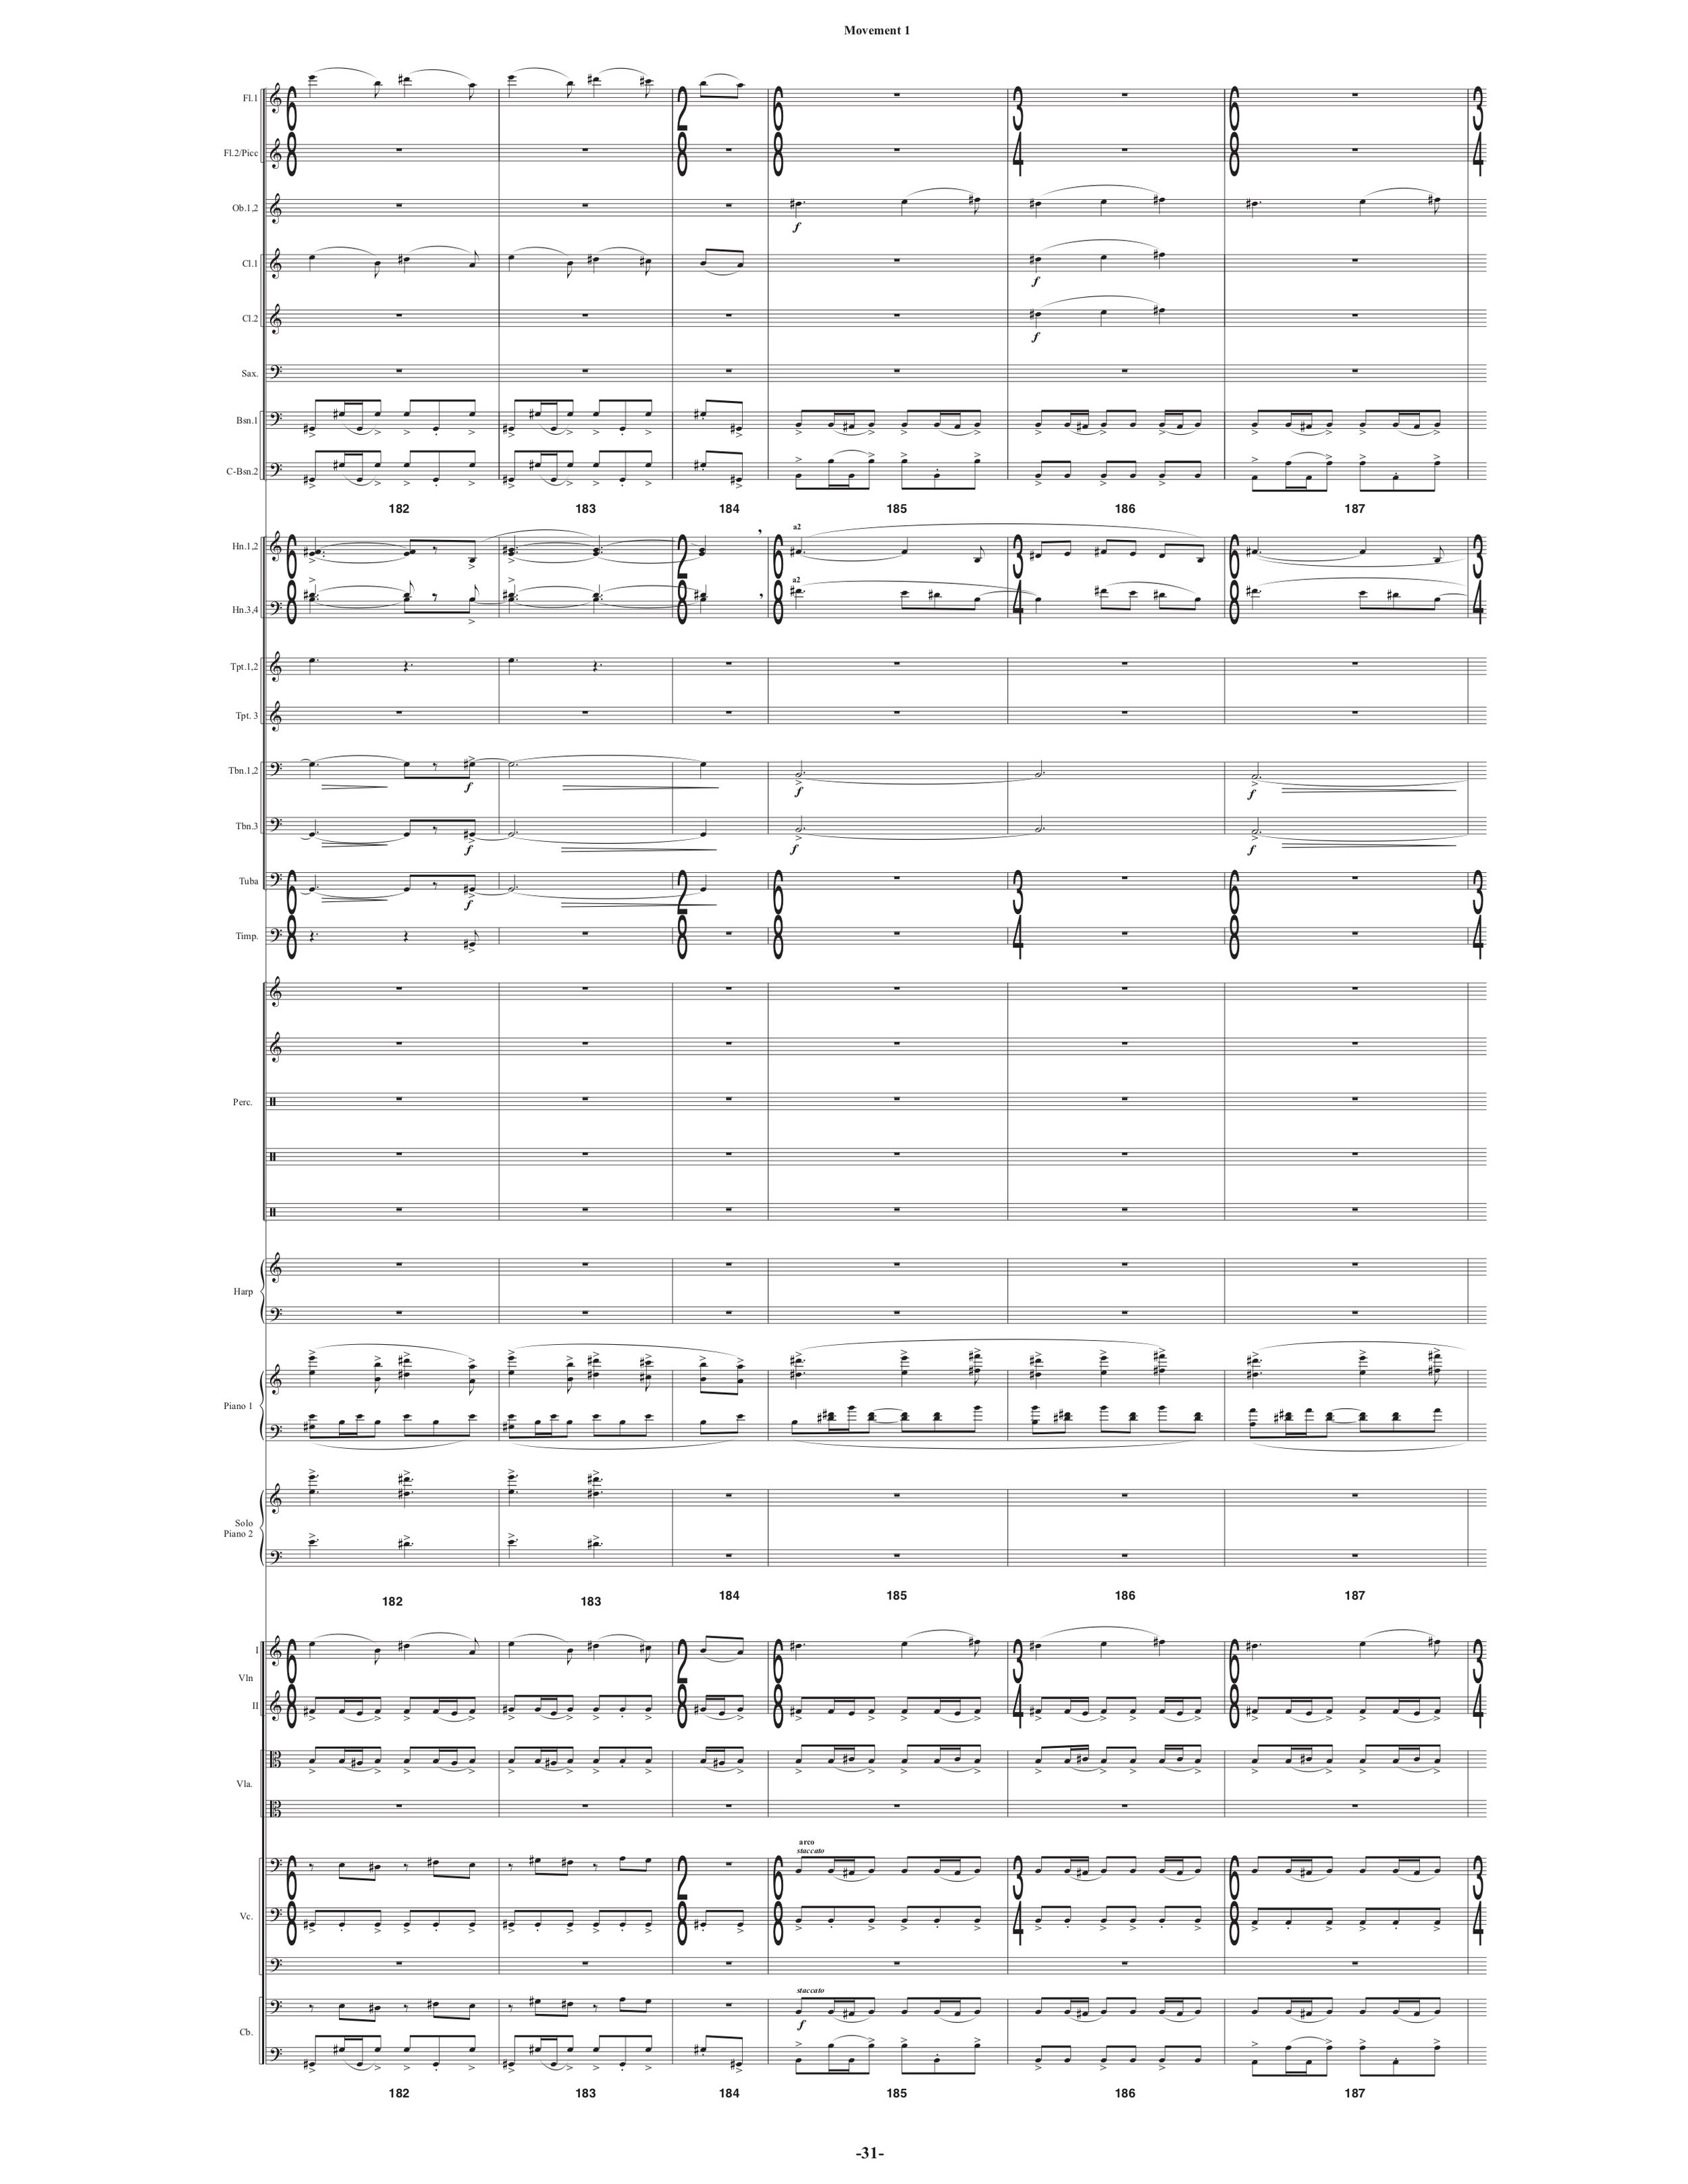 Symphony_Orch & 2 Pianos p36.jpg